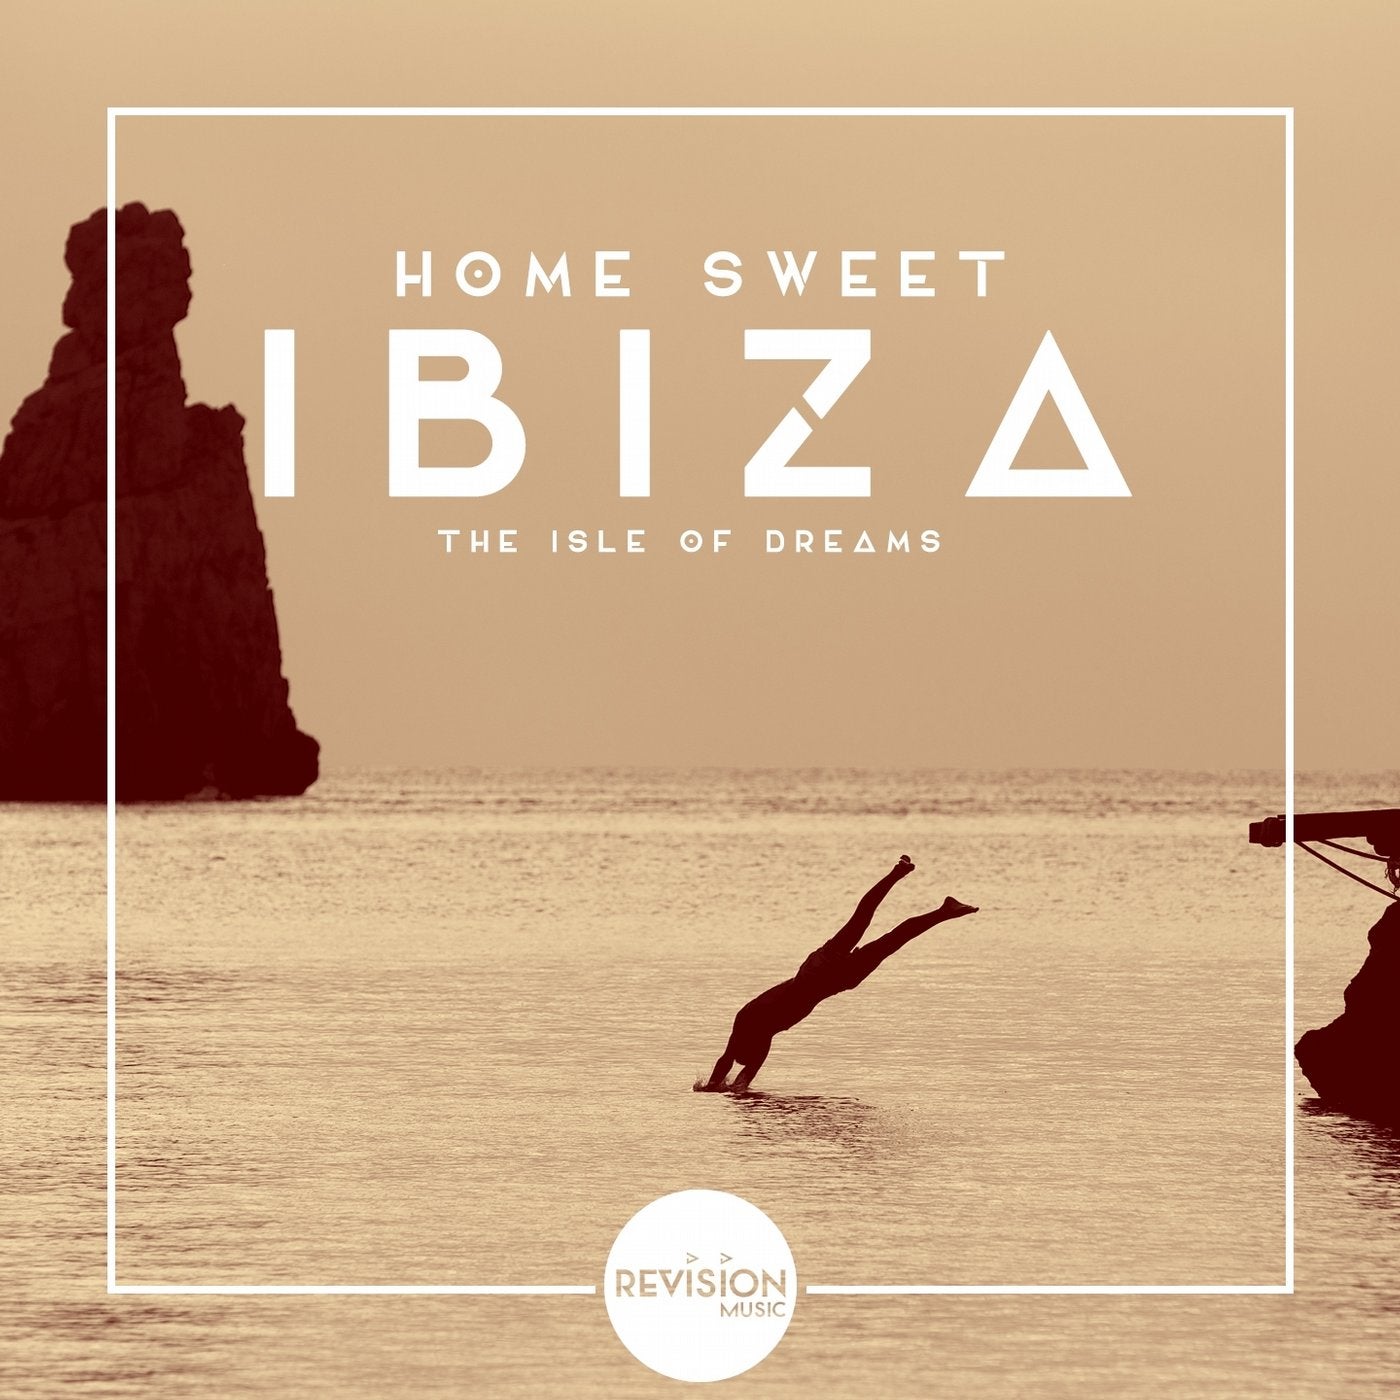 Home Sweet Ibiza (The Isle of Dreams)